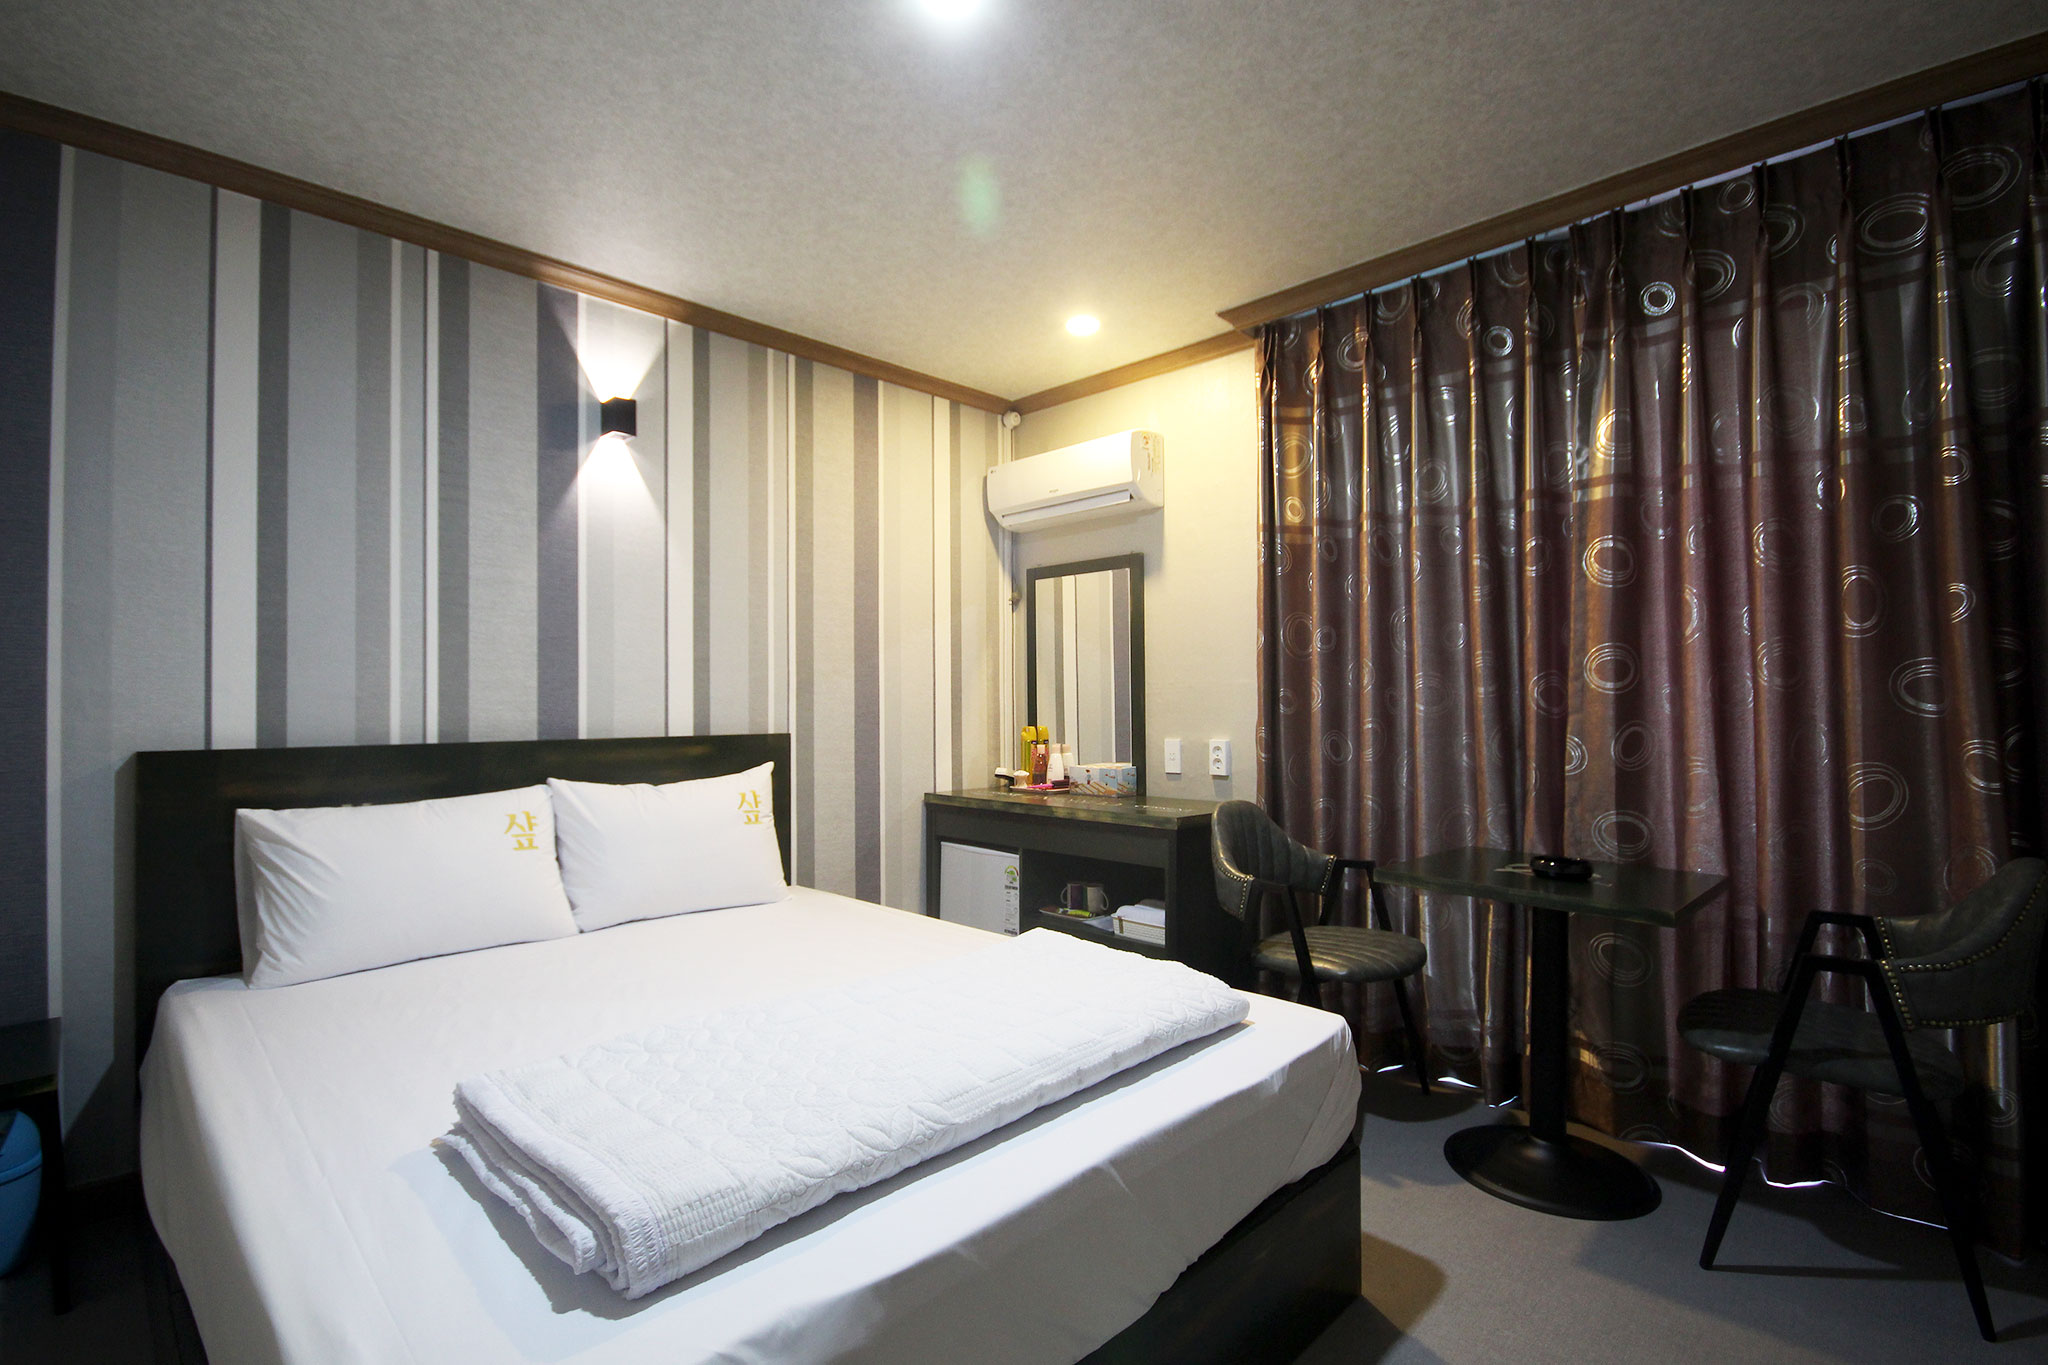 Wanju #(完州郡)を宿泊予約 - 2022年安い料金プラン・口コミ・部屋写真 | Trip.com